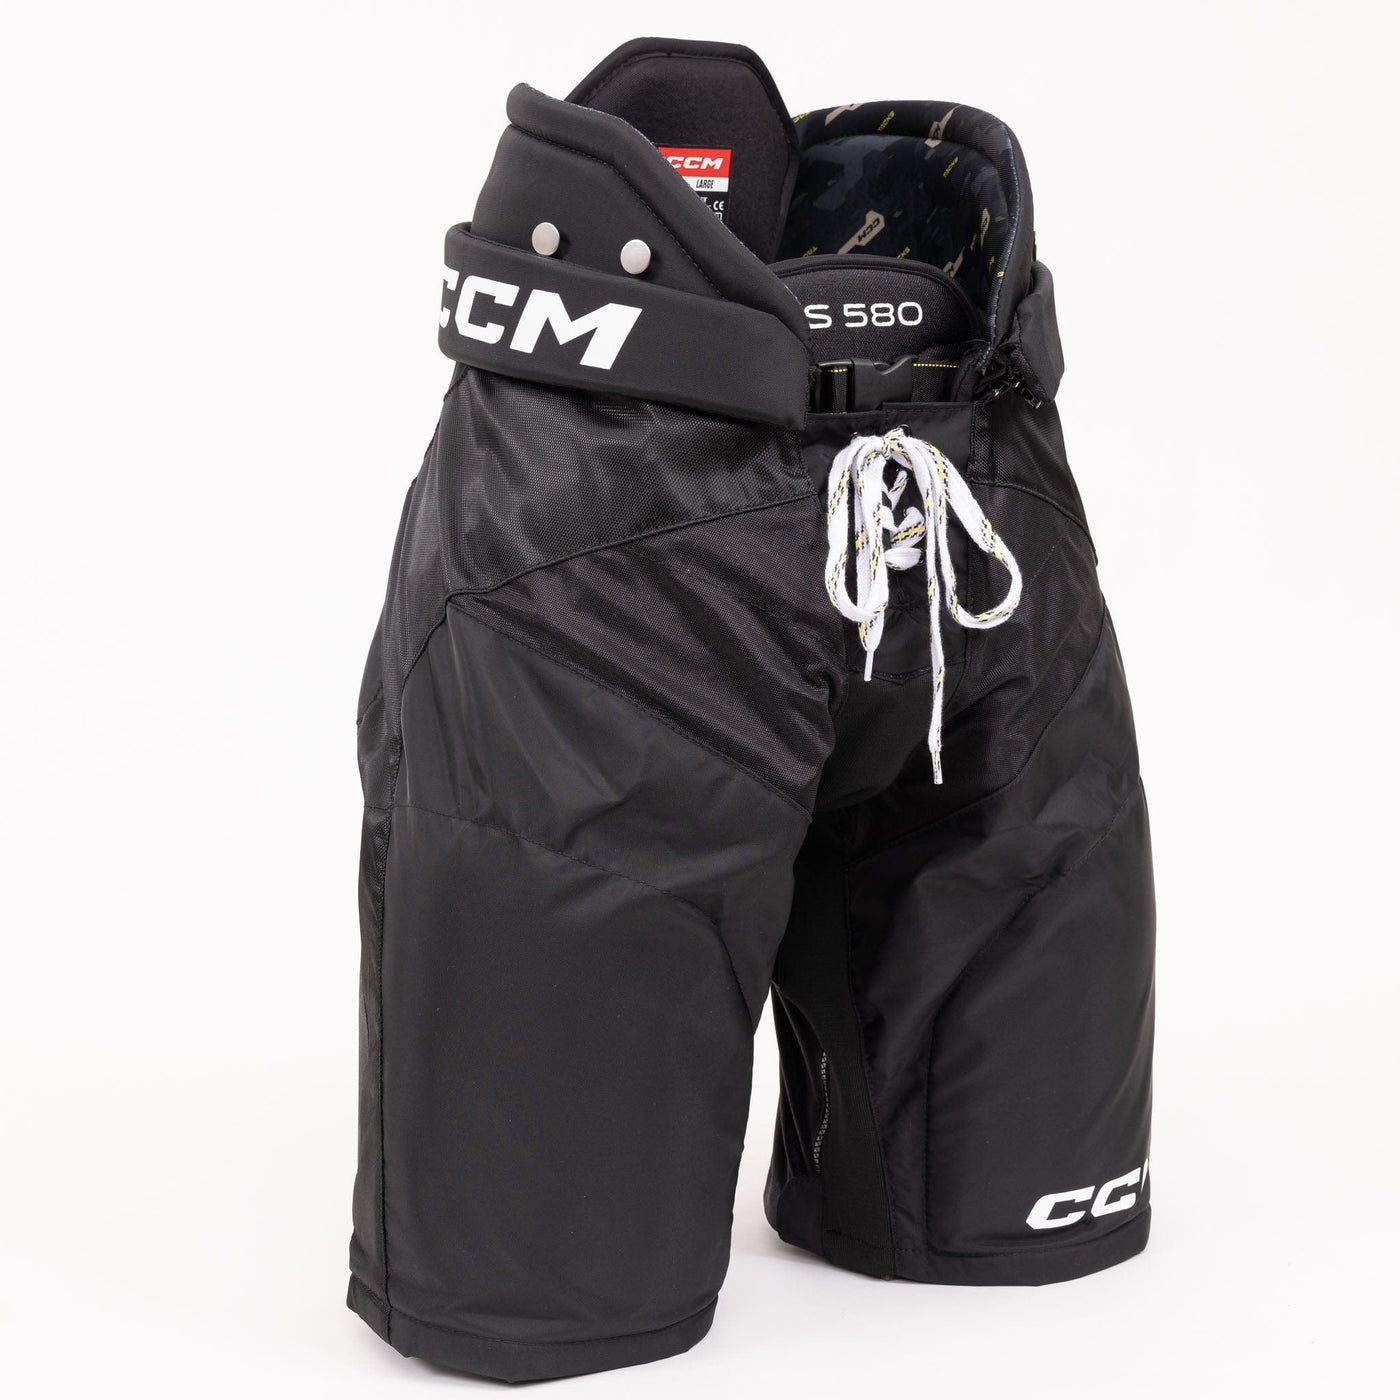 CCM Tacks AS580 Senior Hockey Pants - The Hockey Shop Source For Sports